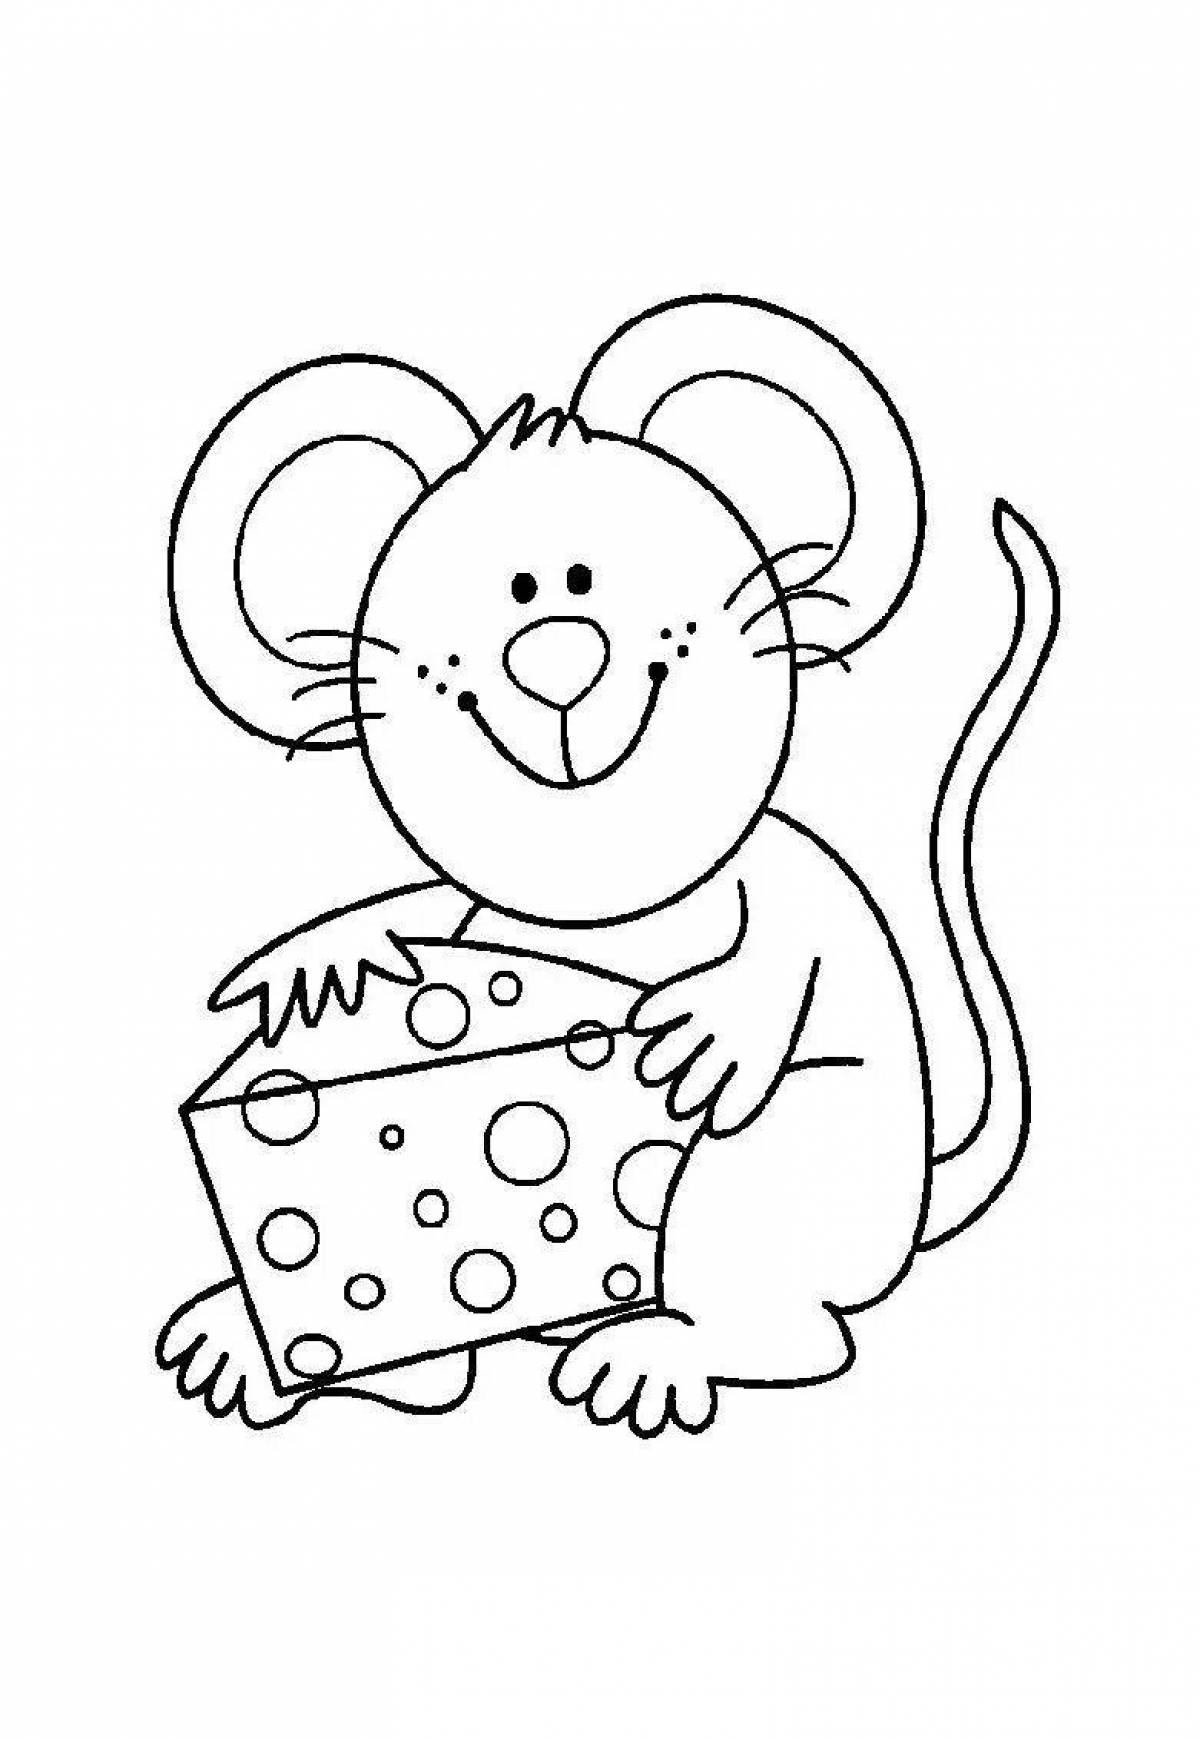 Красочная раскраска мышь для детей